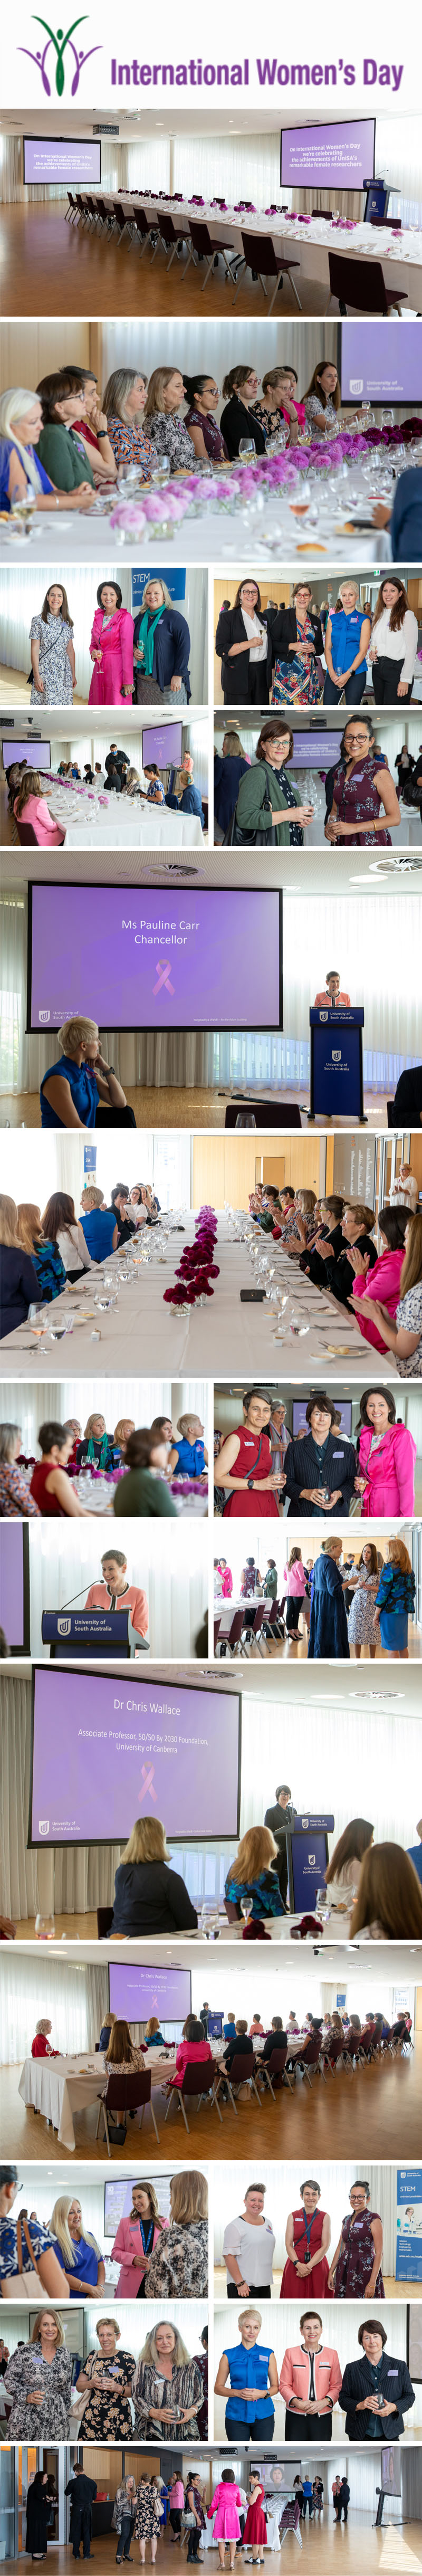 Adelaide International Women’s Day Breakfast. Photos by Alice Healy 